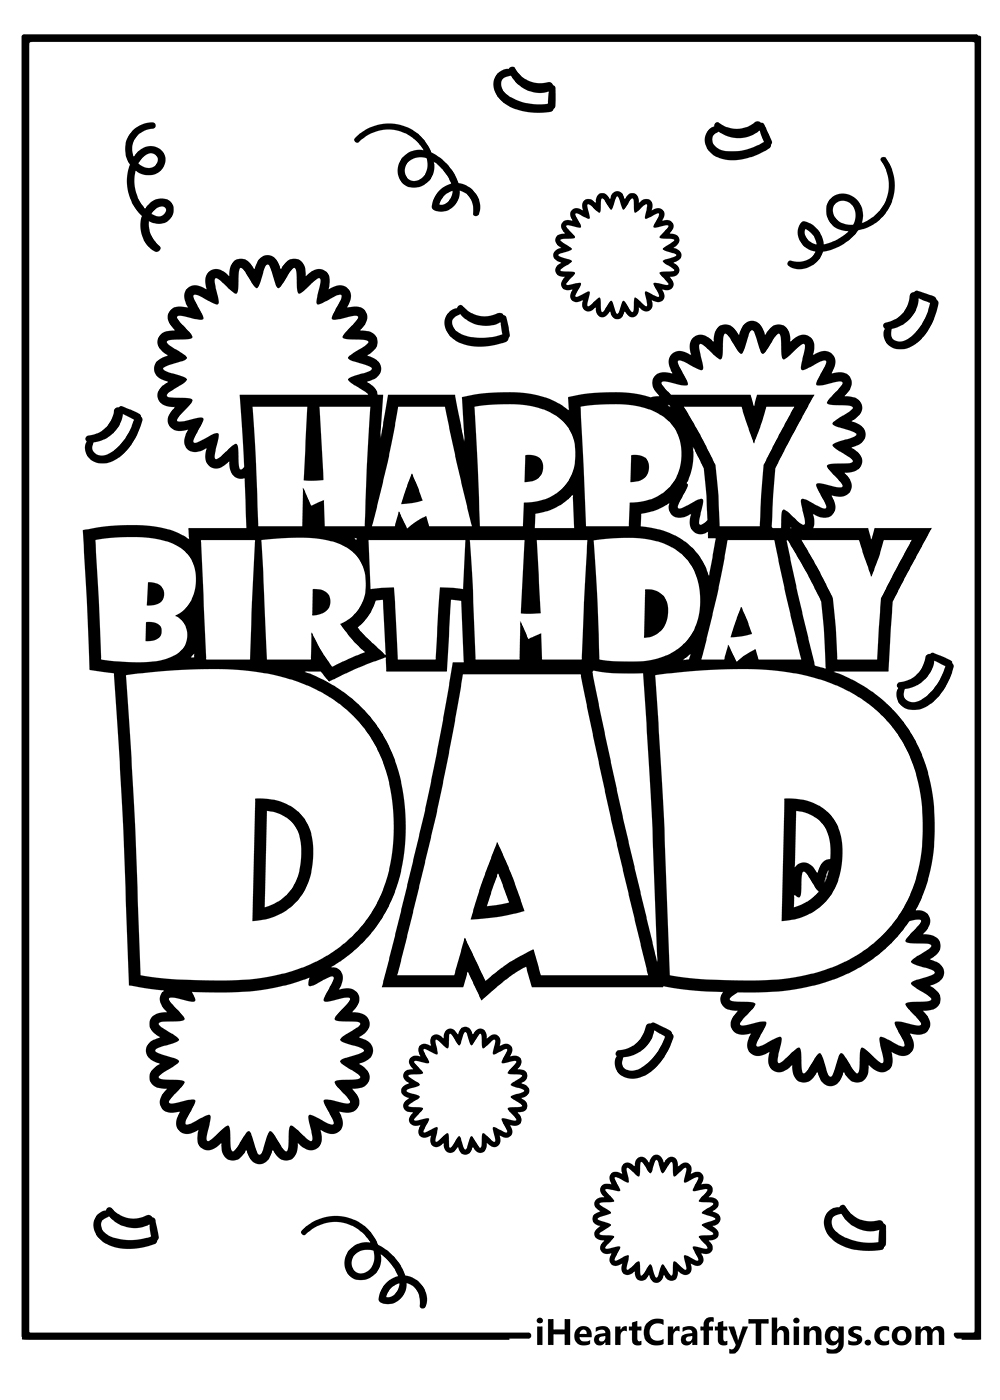 Happy Birthday Dad Coloring Original Sheet for children free download